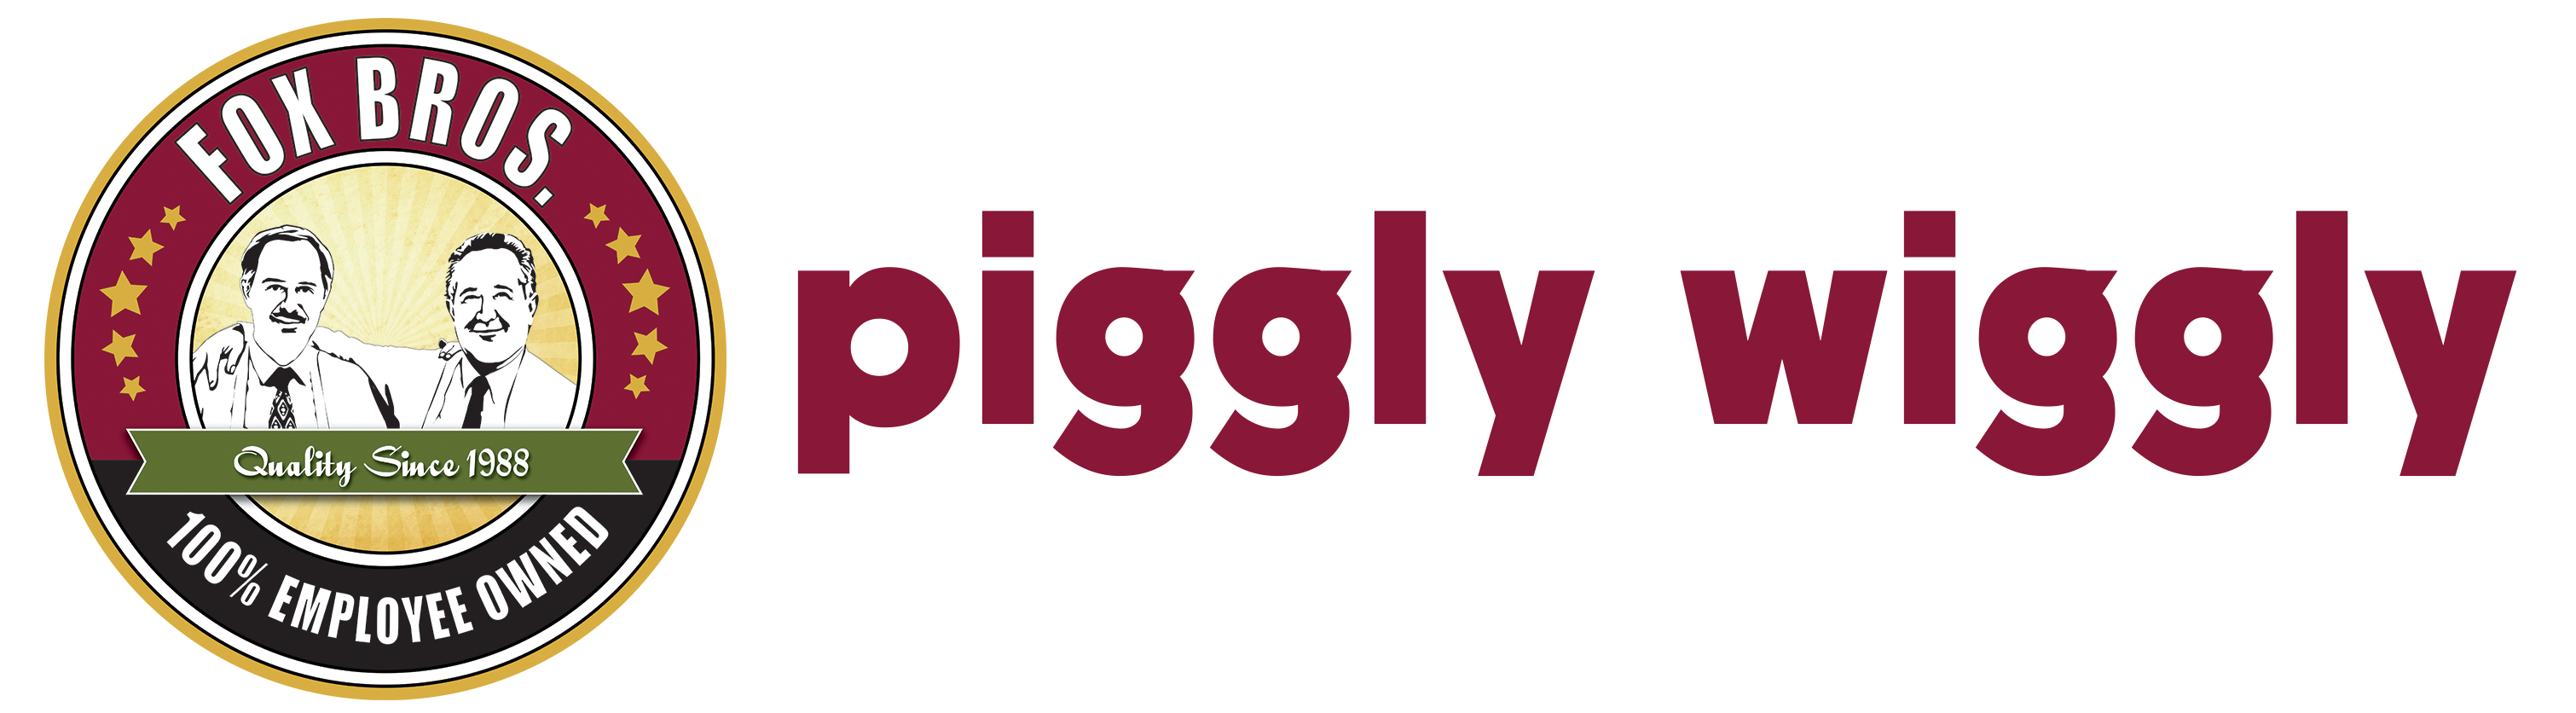 Fox Bros. Piggly Wiggly Company Logo